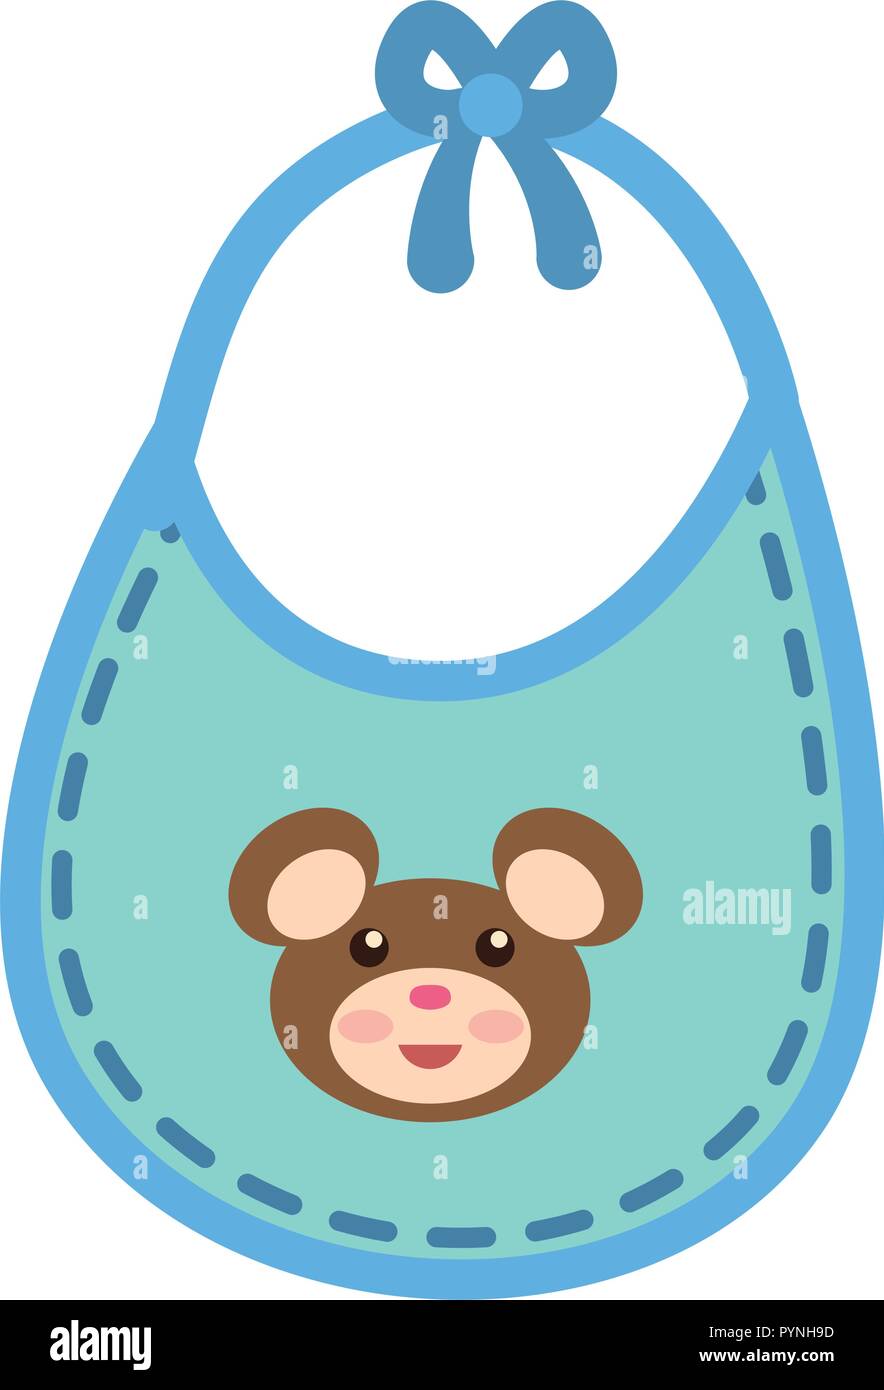 Download baby bib isolated icon vector illustration design Stock ...